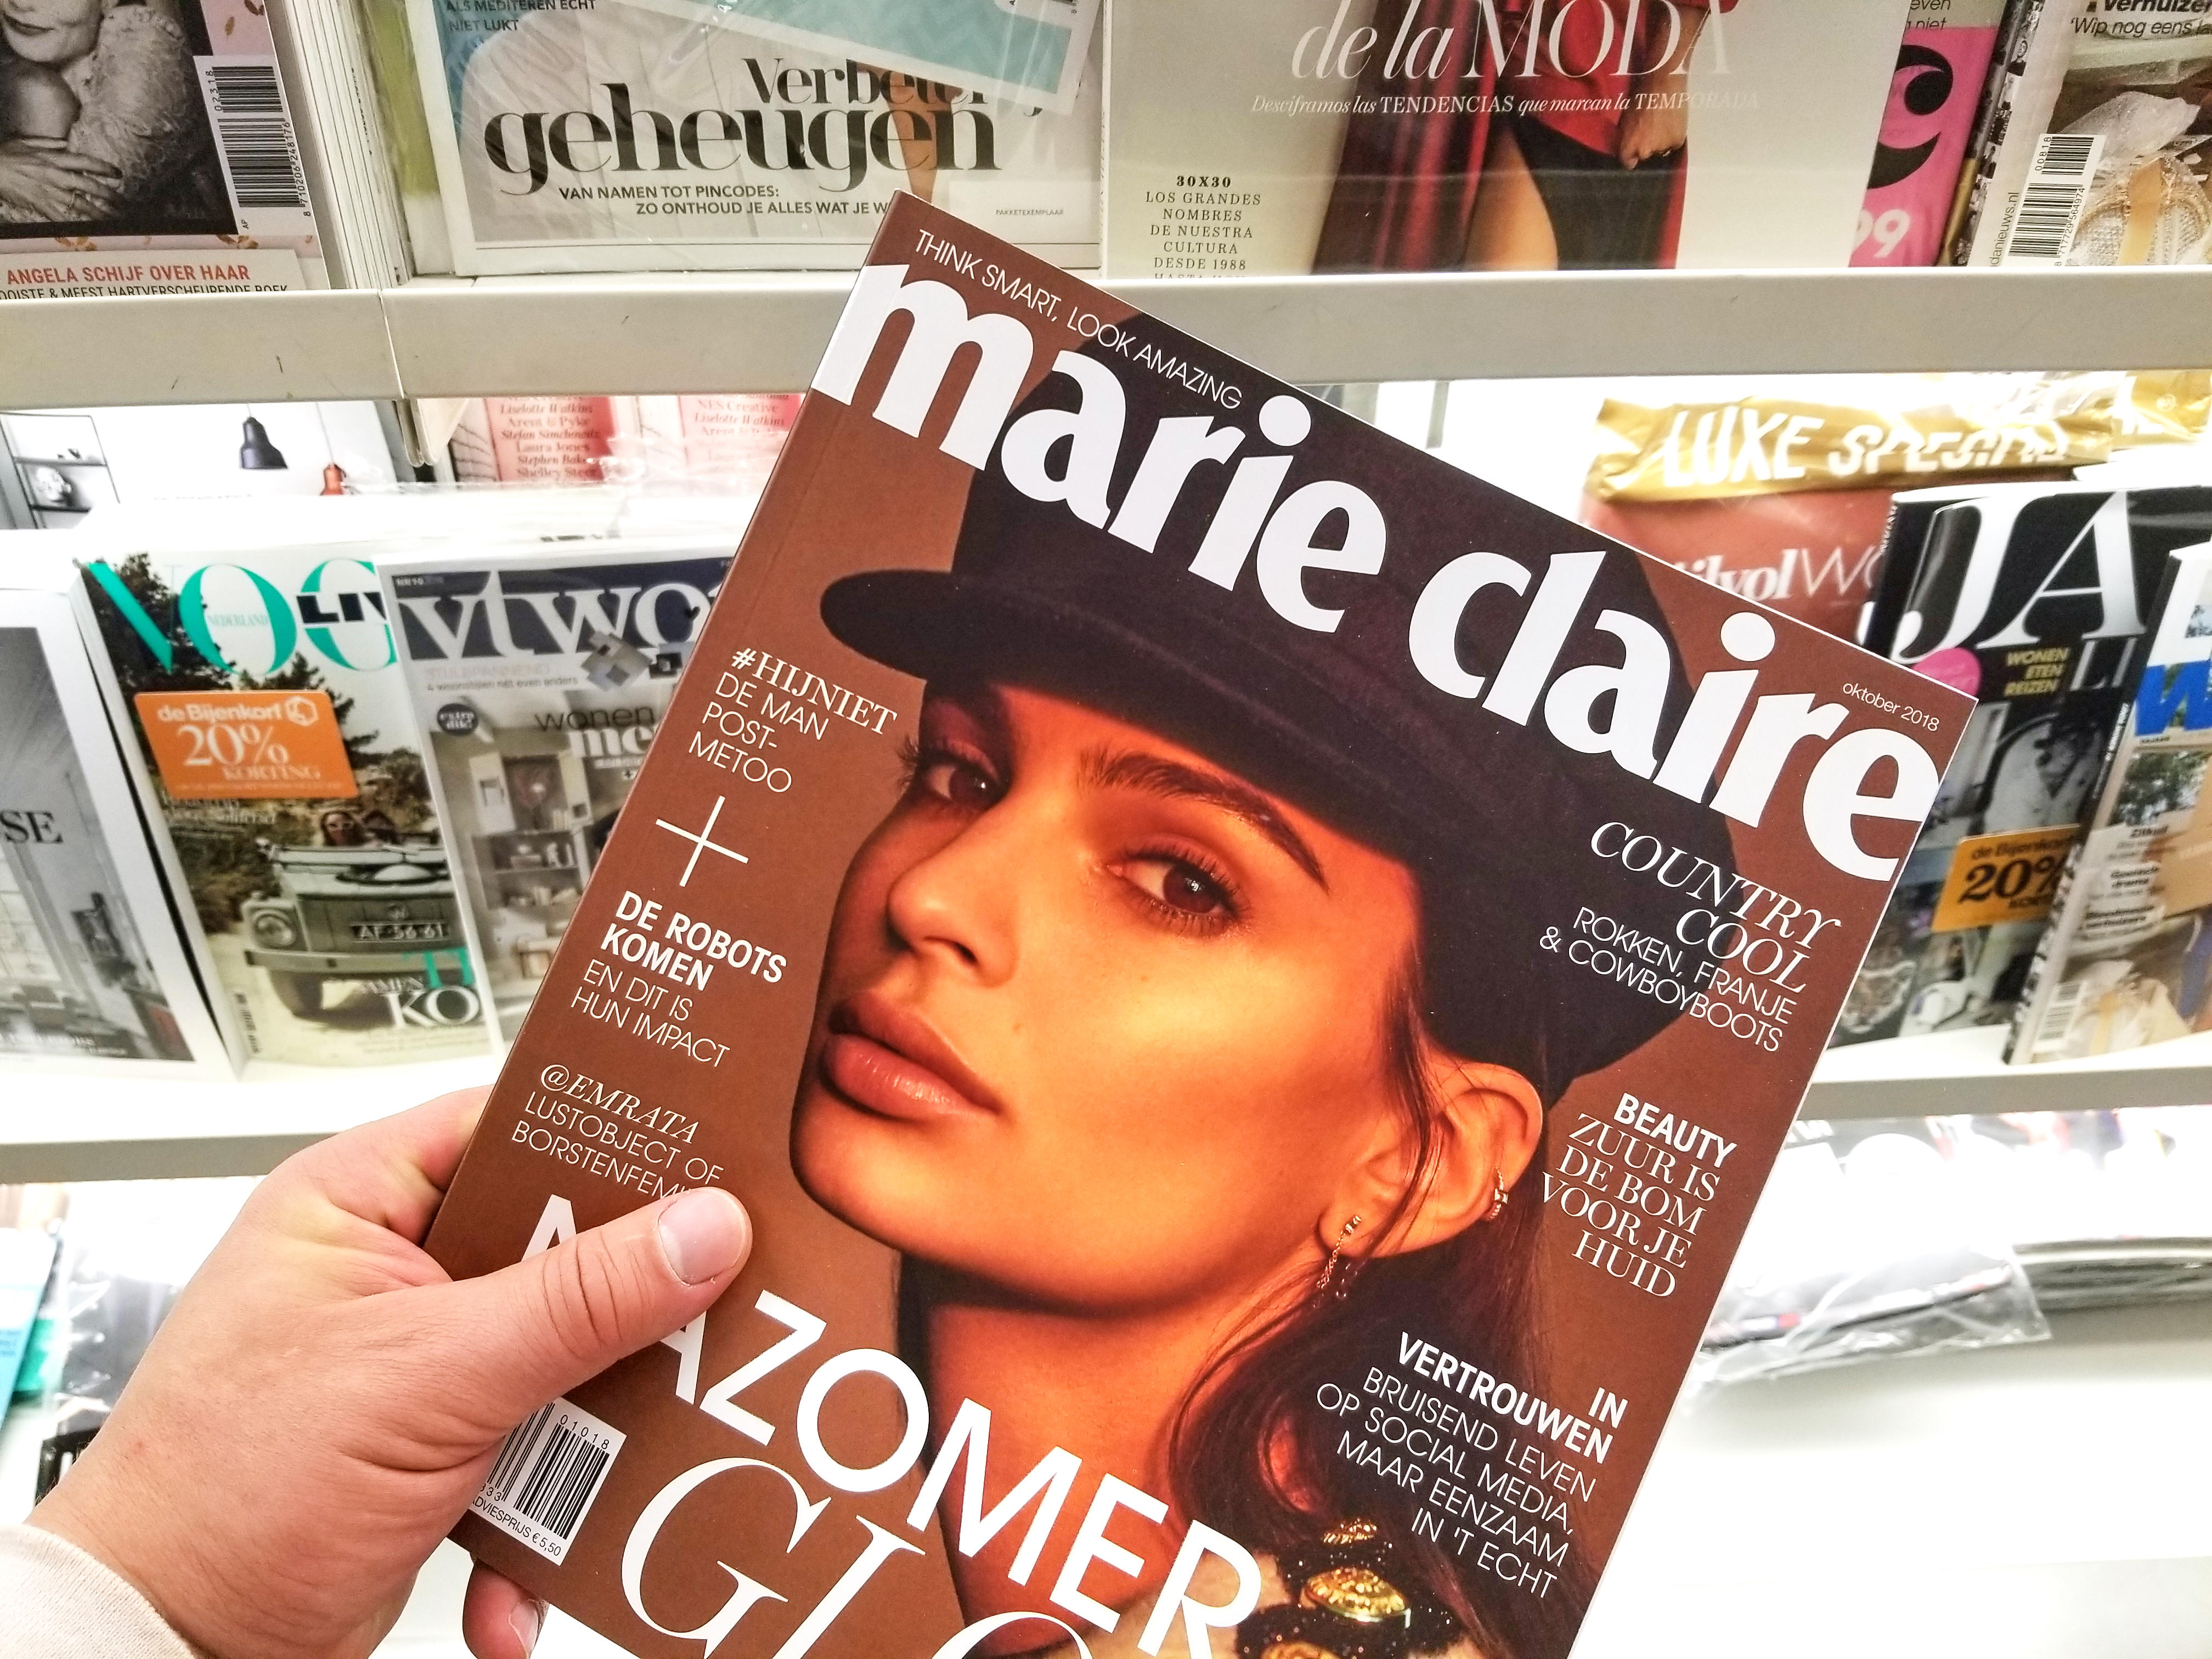 A Marie Claire magazine